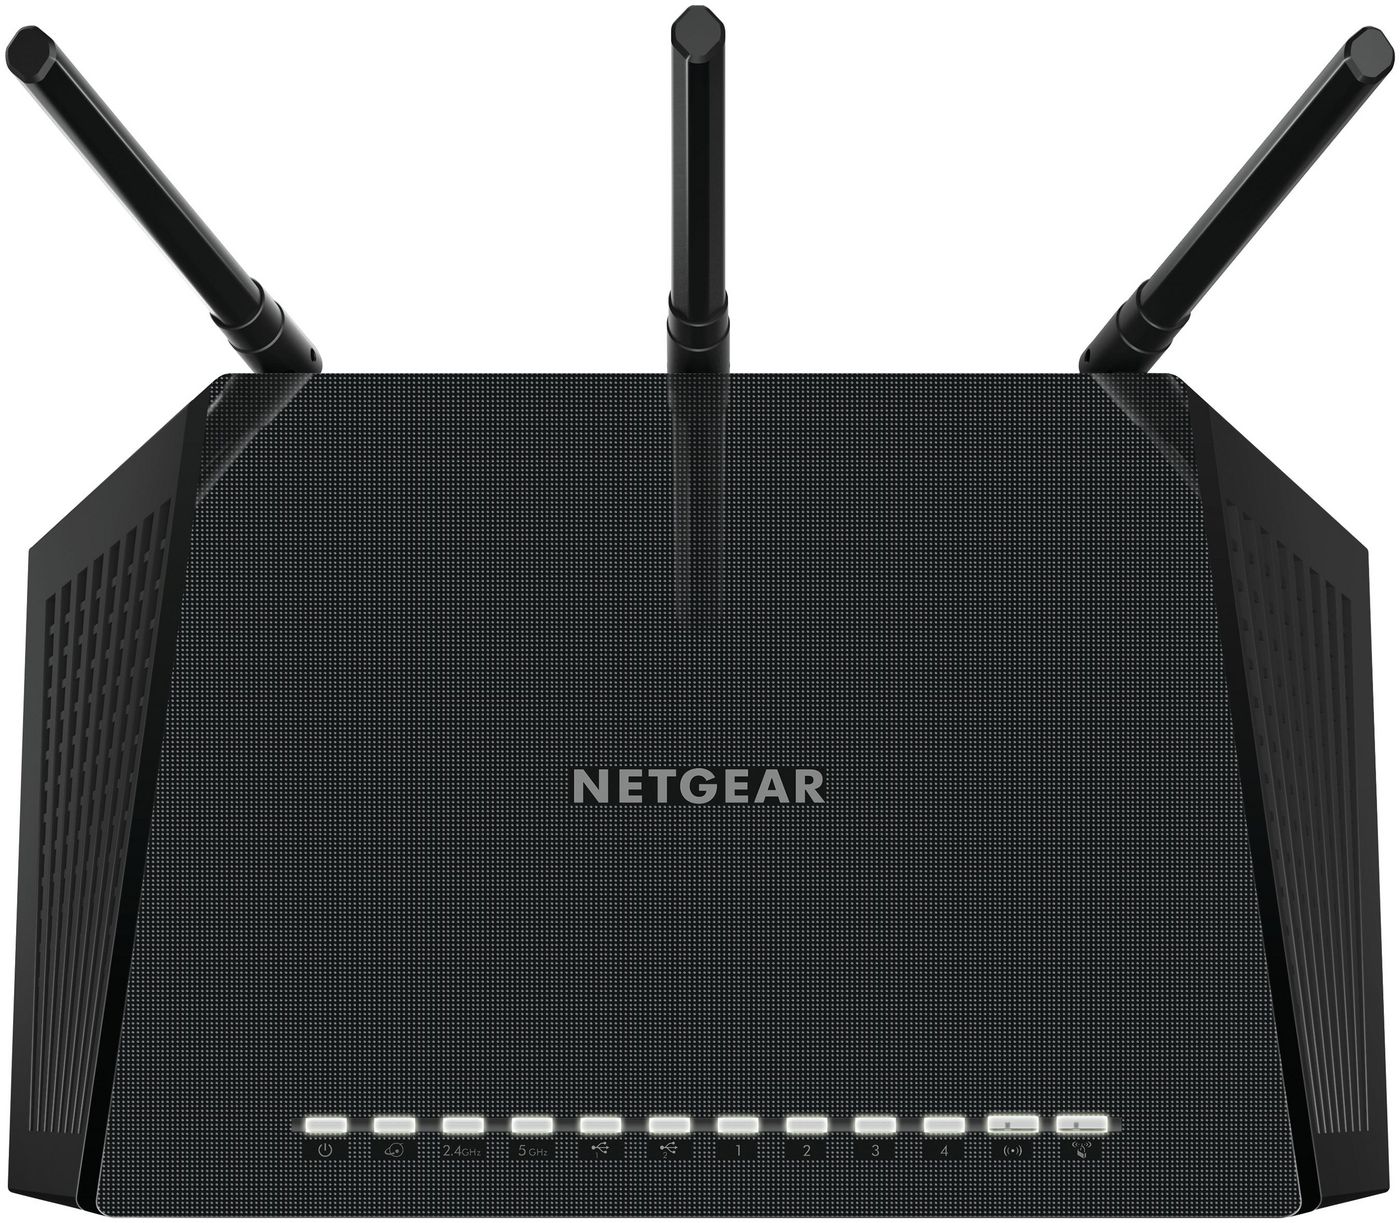 Netgear R6400-100PES AC1750 WL.DUALB GB ROUTER 